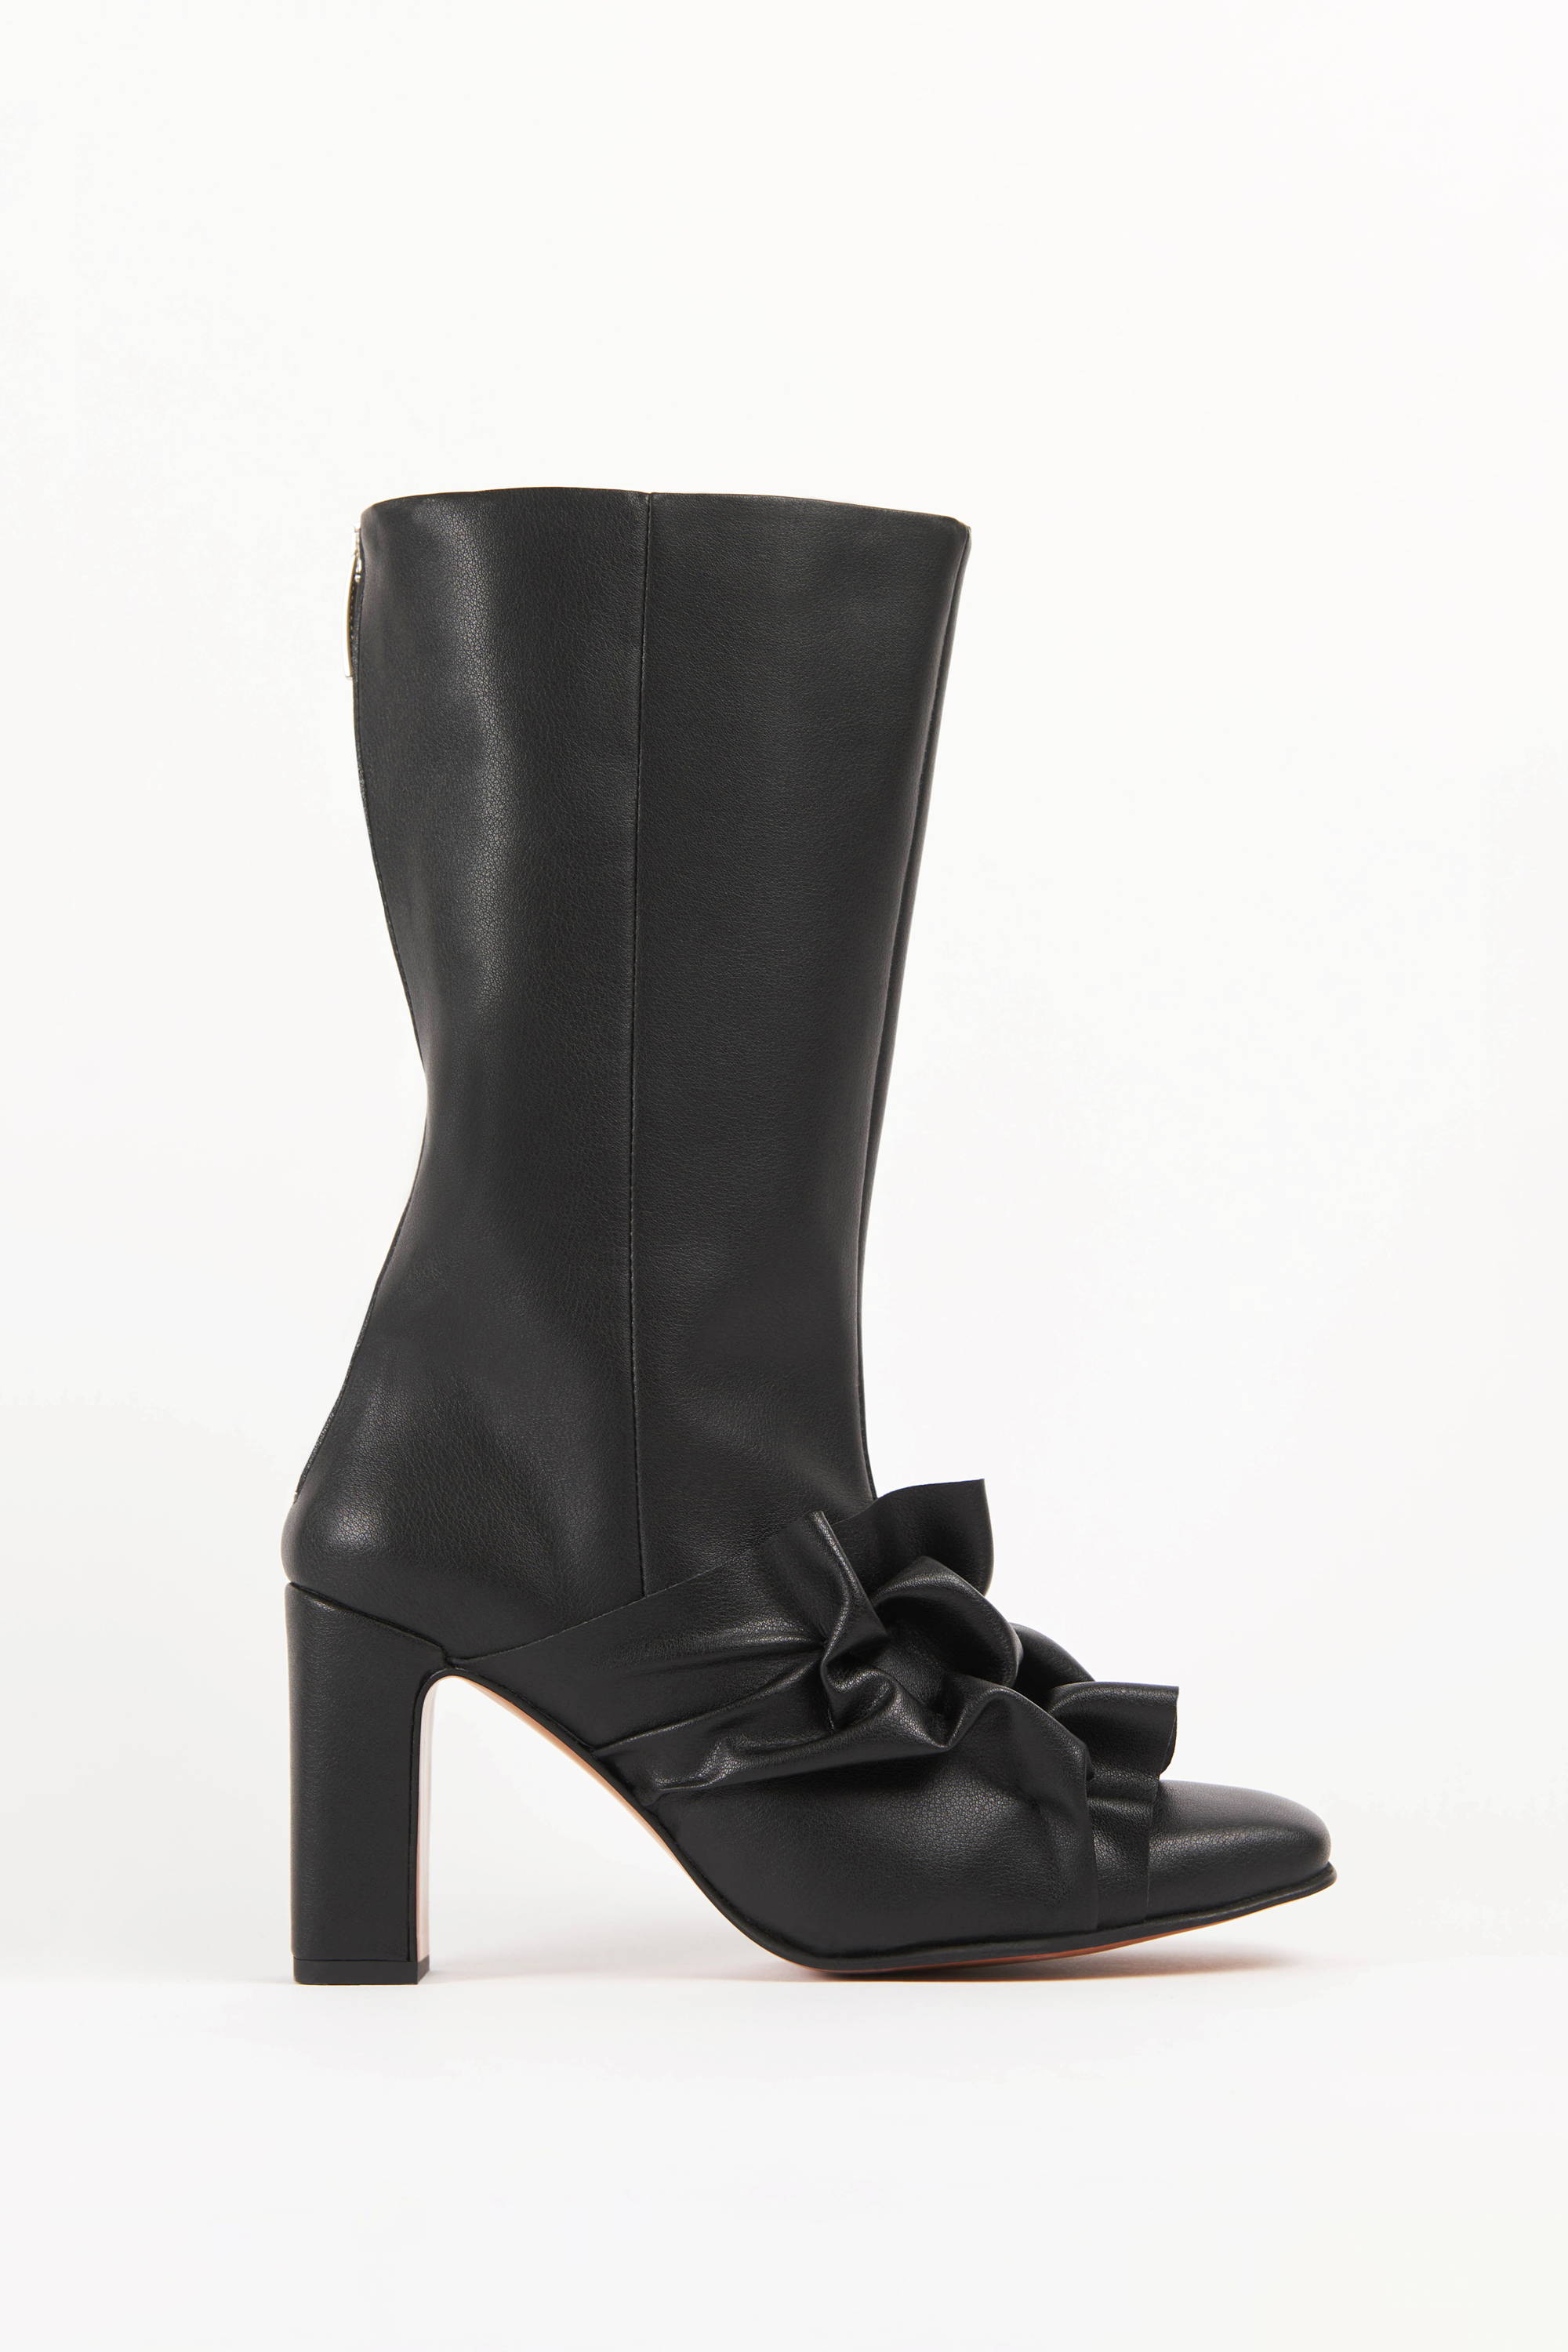 Vandrelaar Greta black vegan leather high-heel ankle boot for women featuring canadian smocking detailing and silver zip